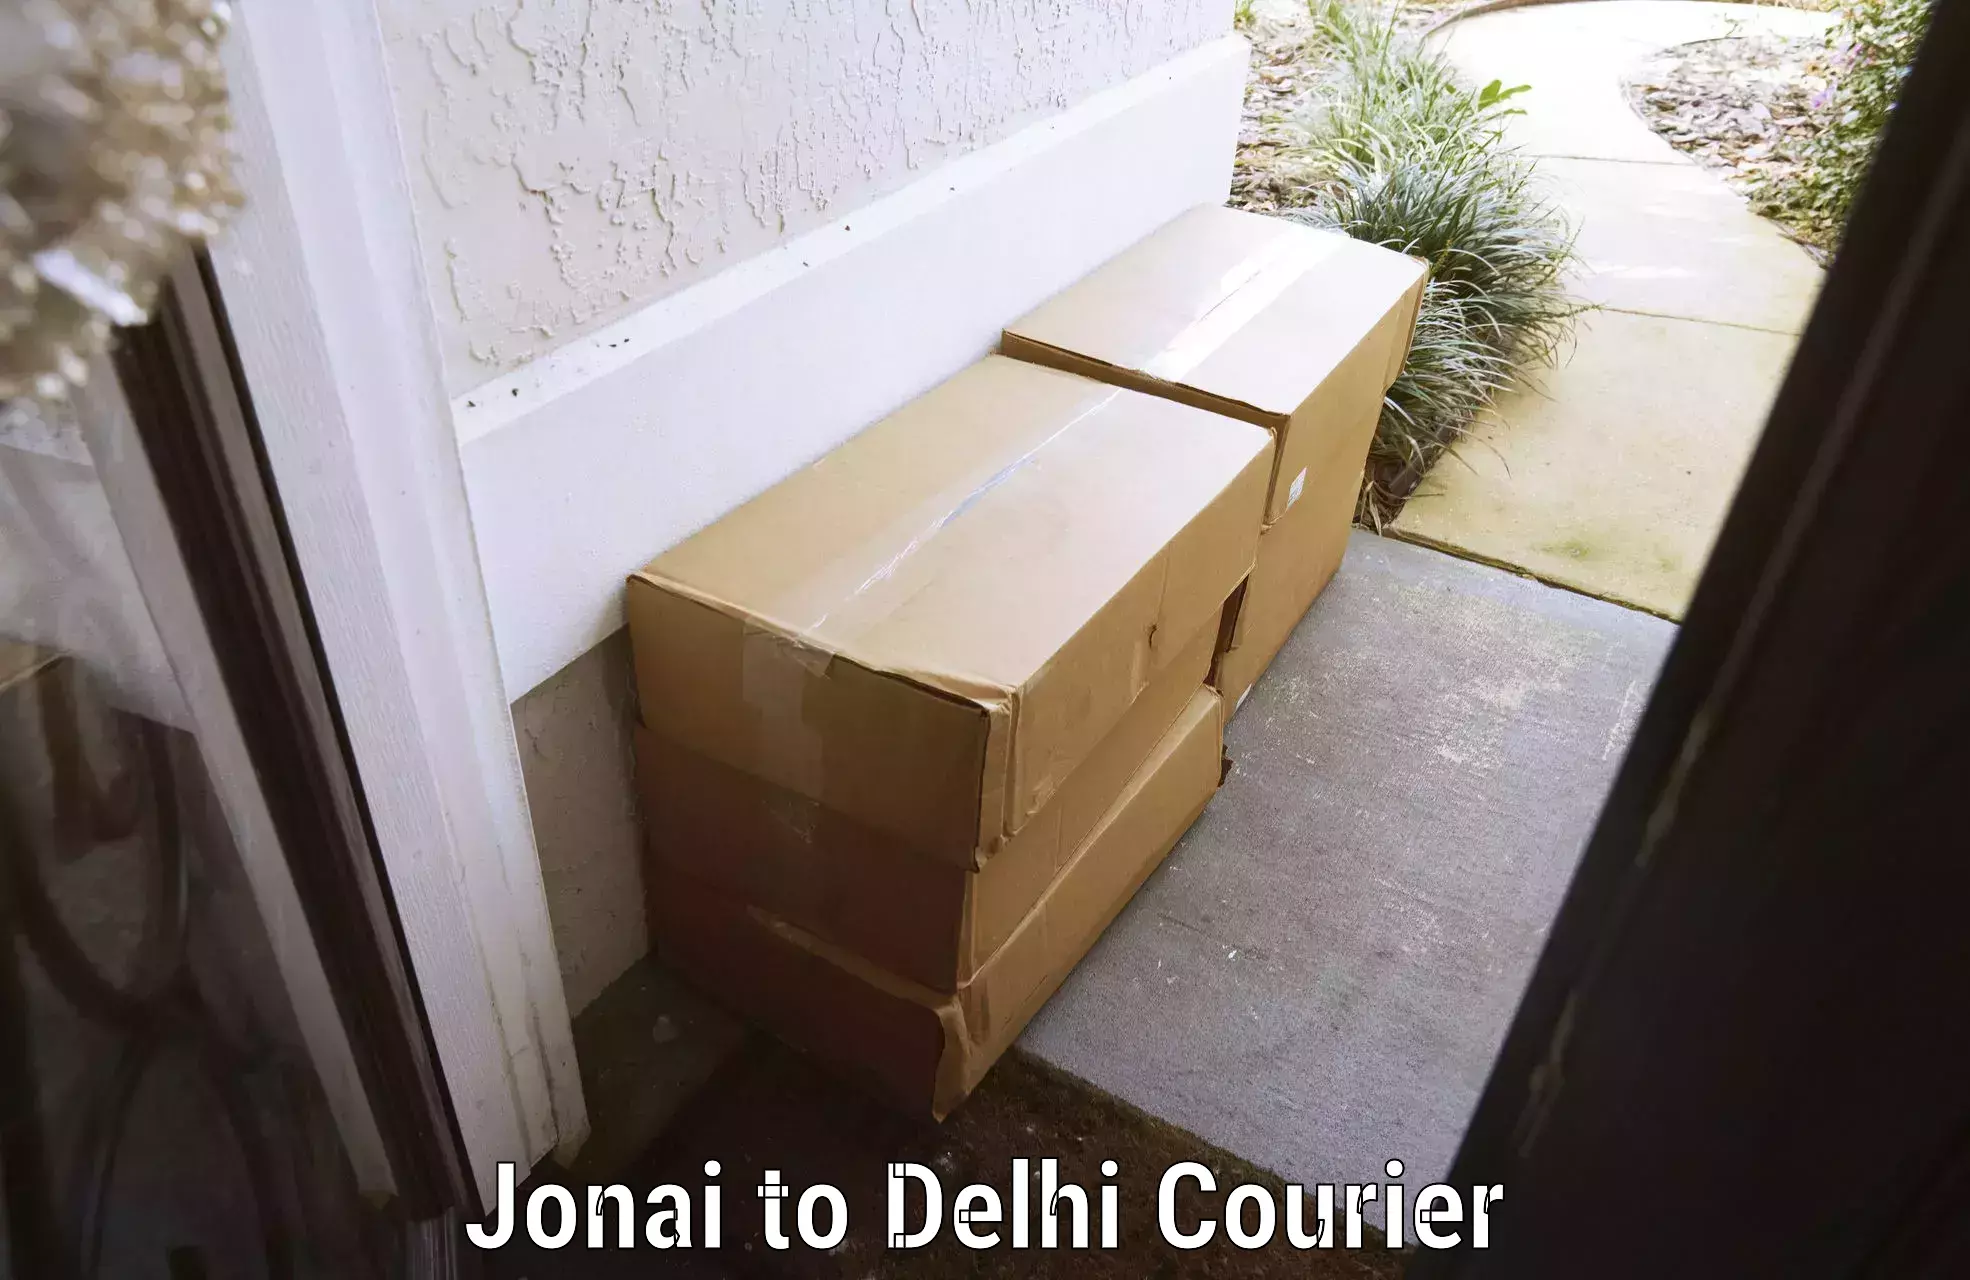 Same day luggage service Jonai to East Delhi